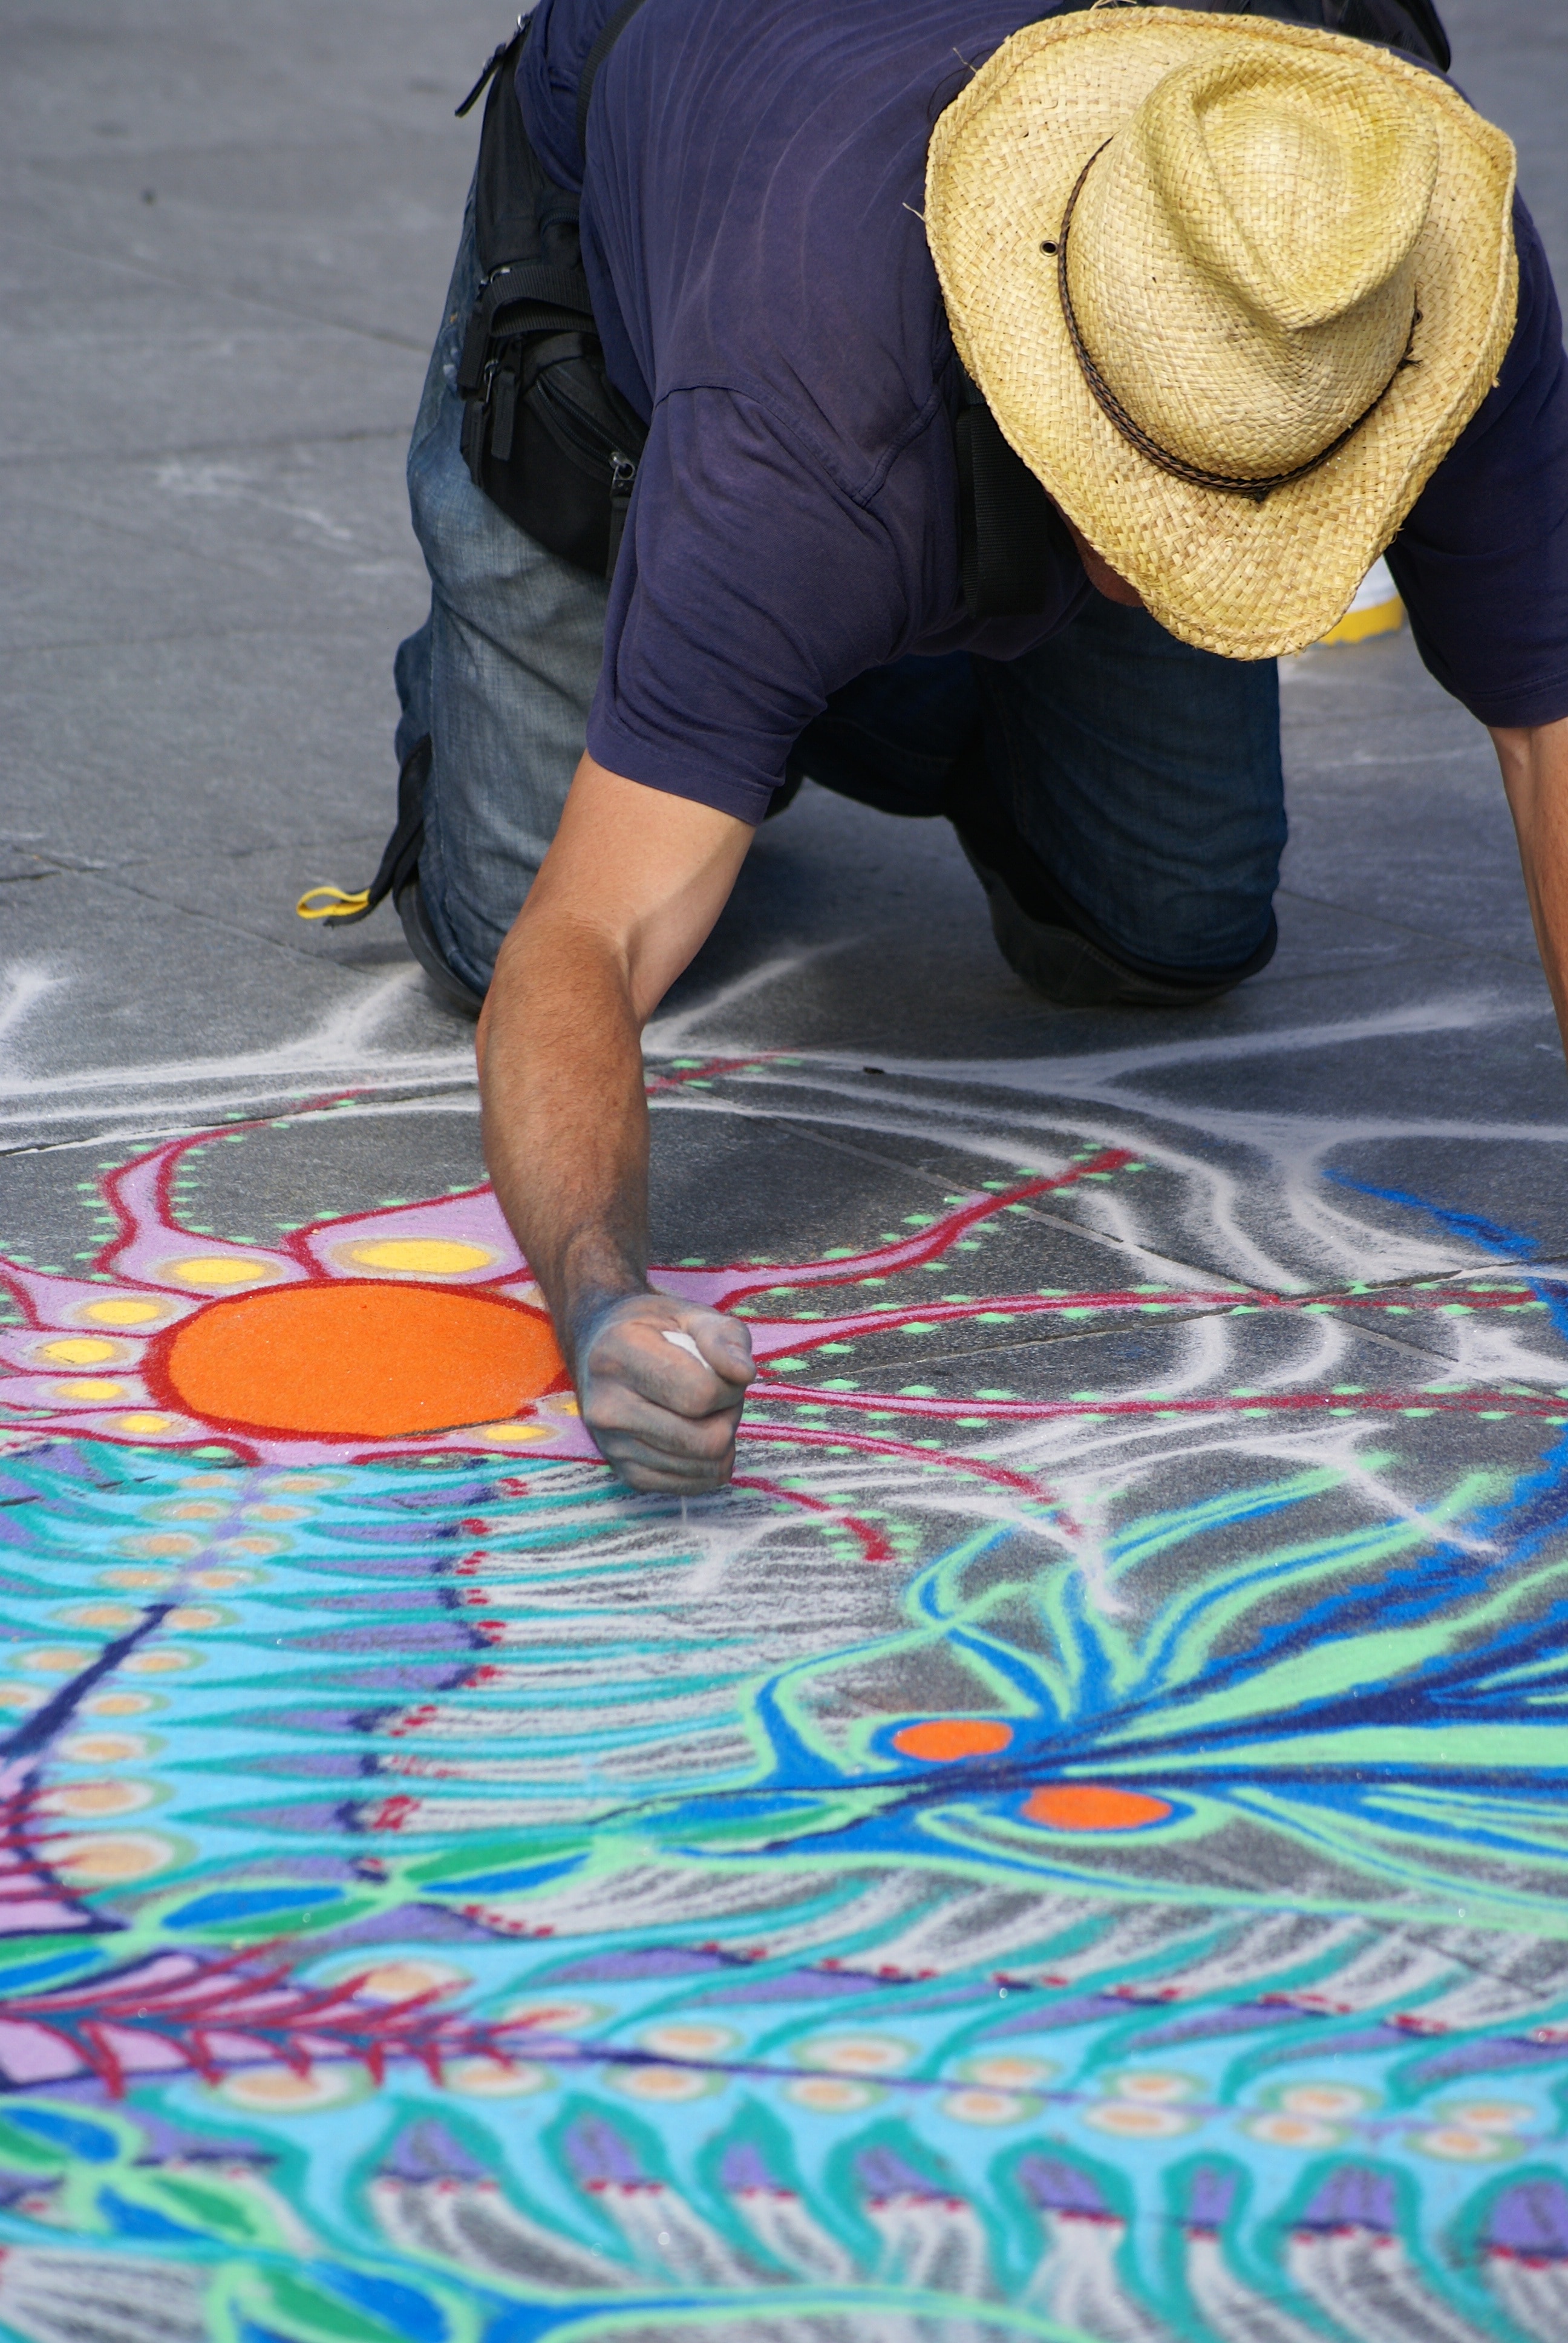 man in blue shirt making a floor art during daytime